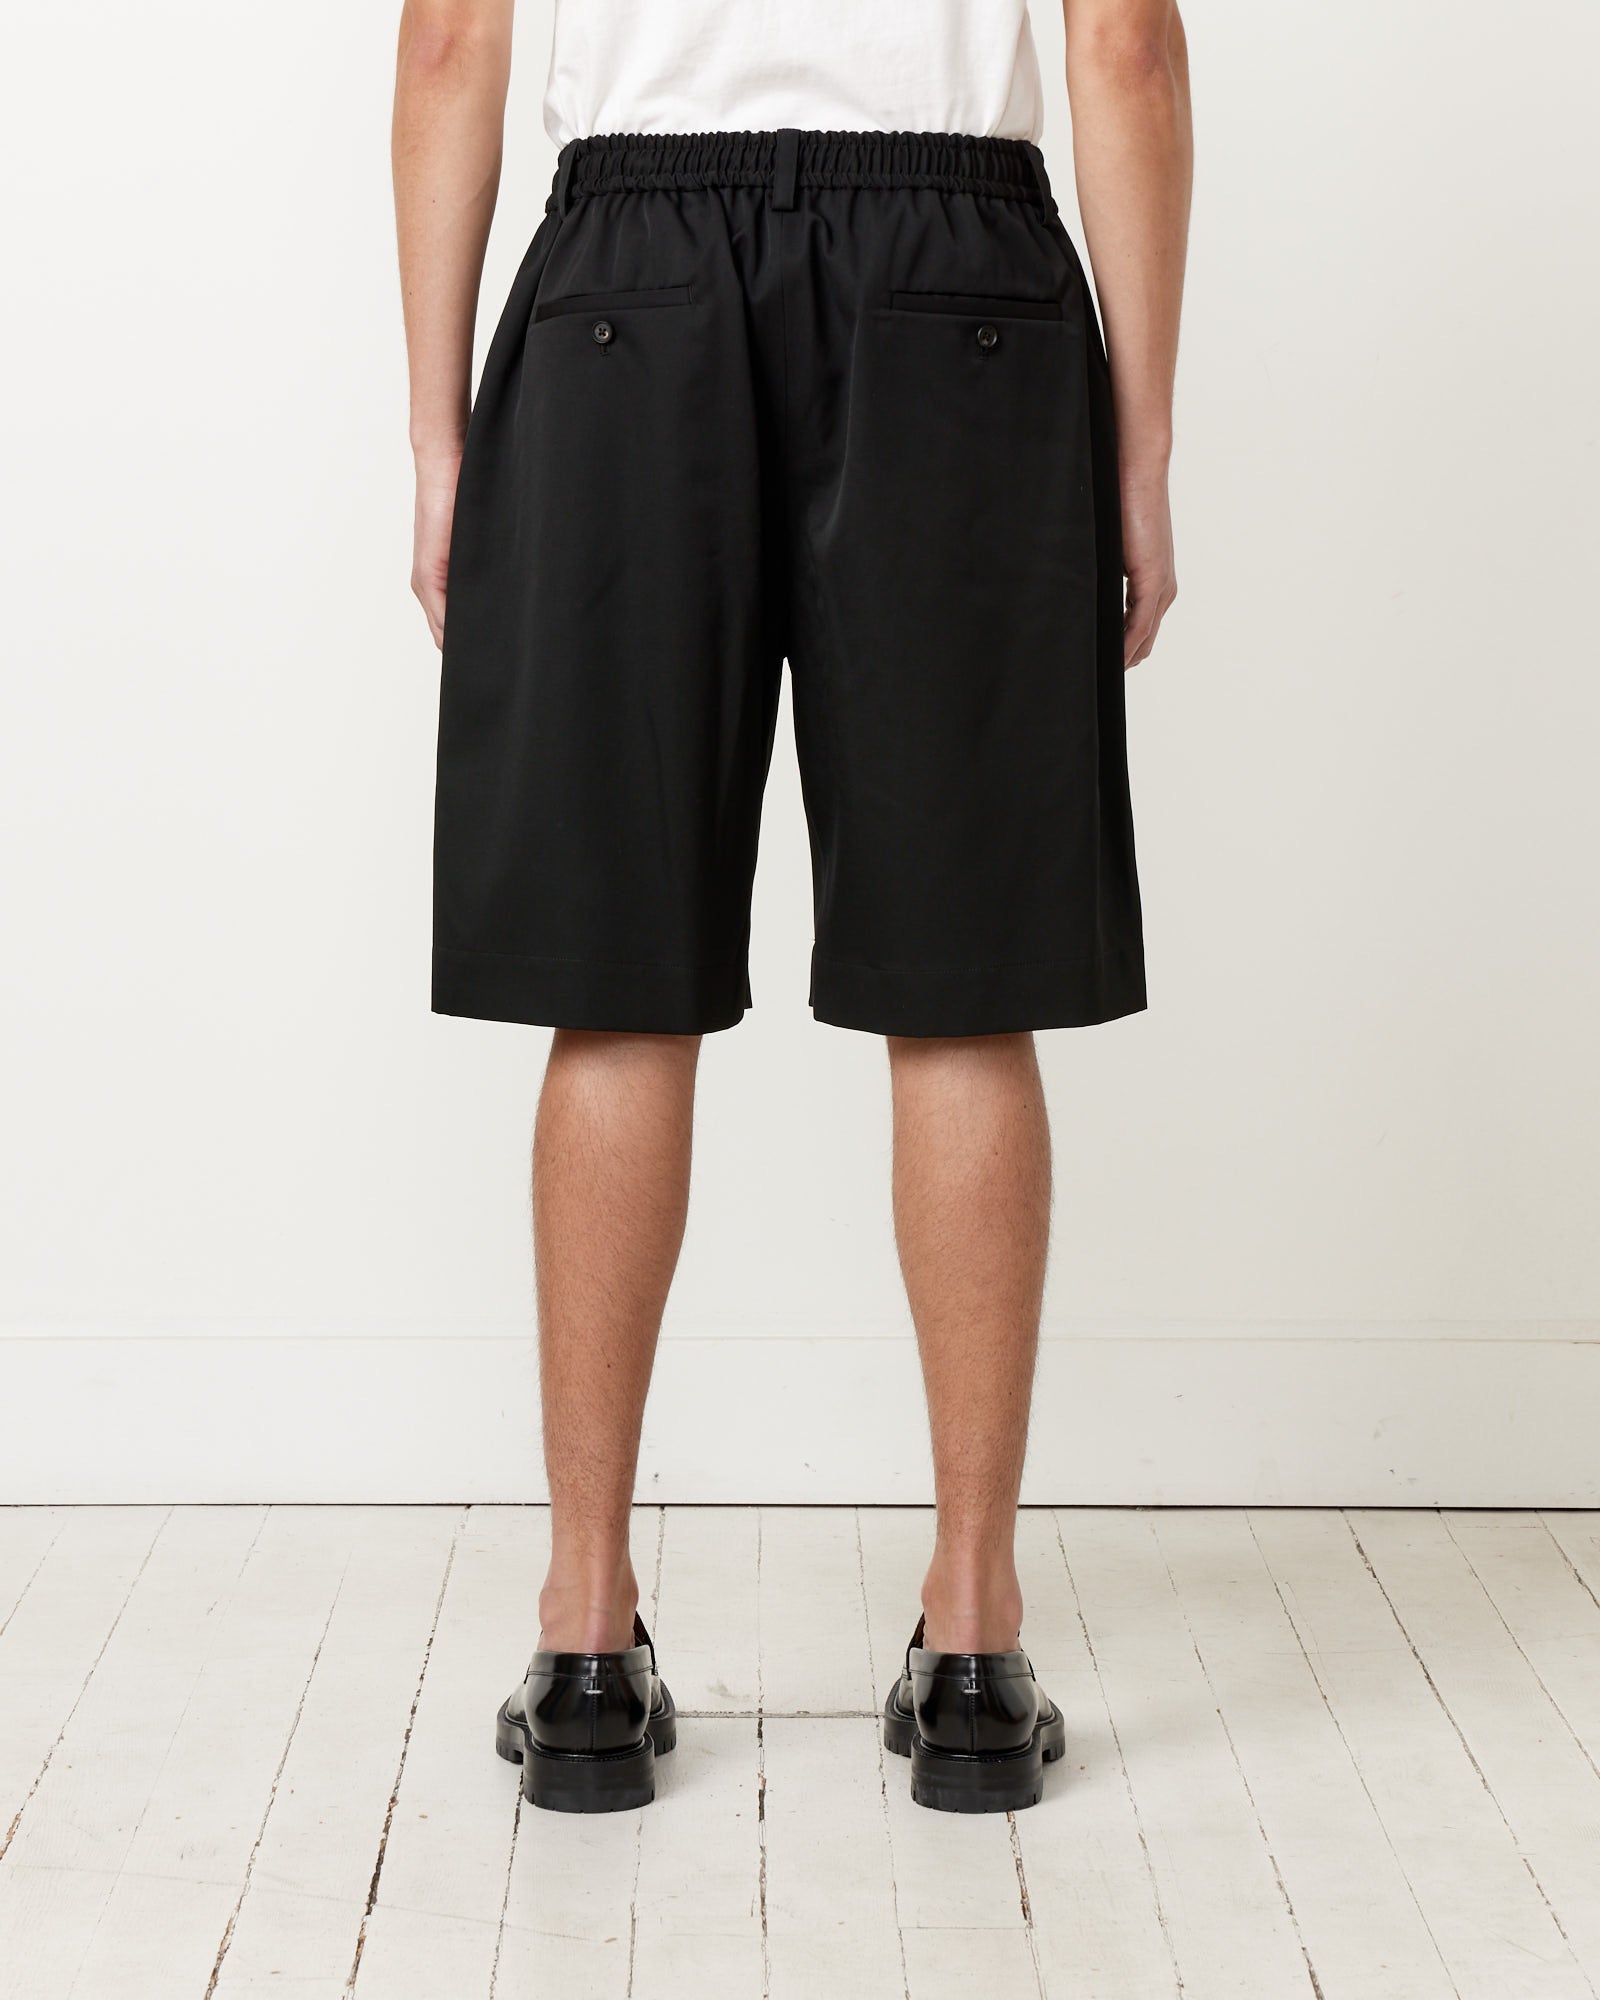 St. 807 Shorts in Black